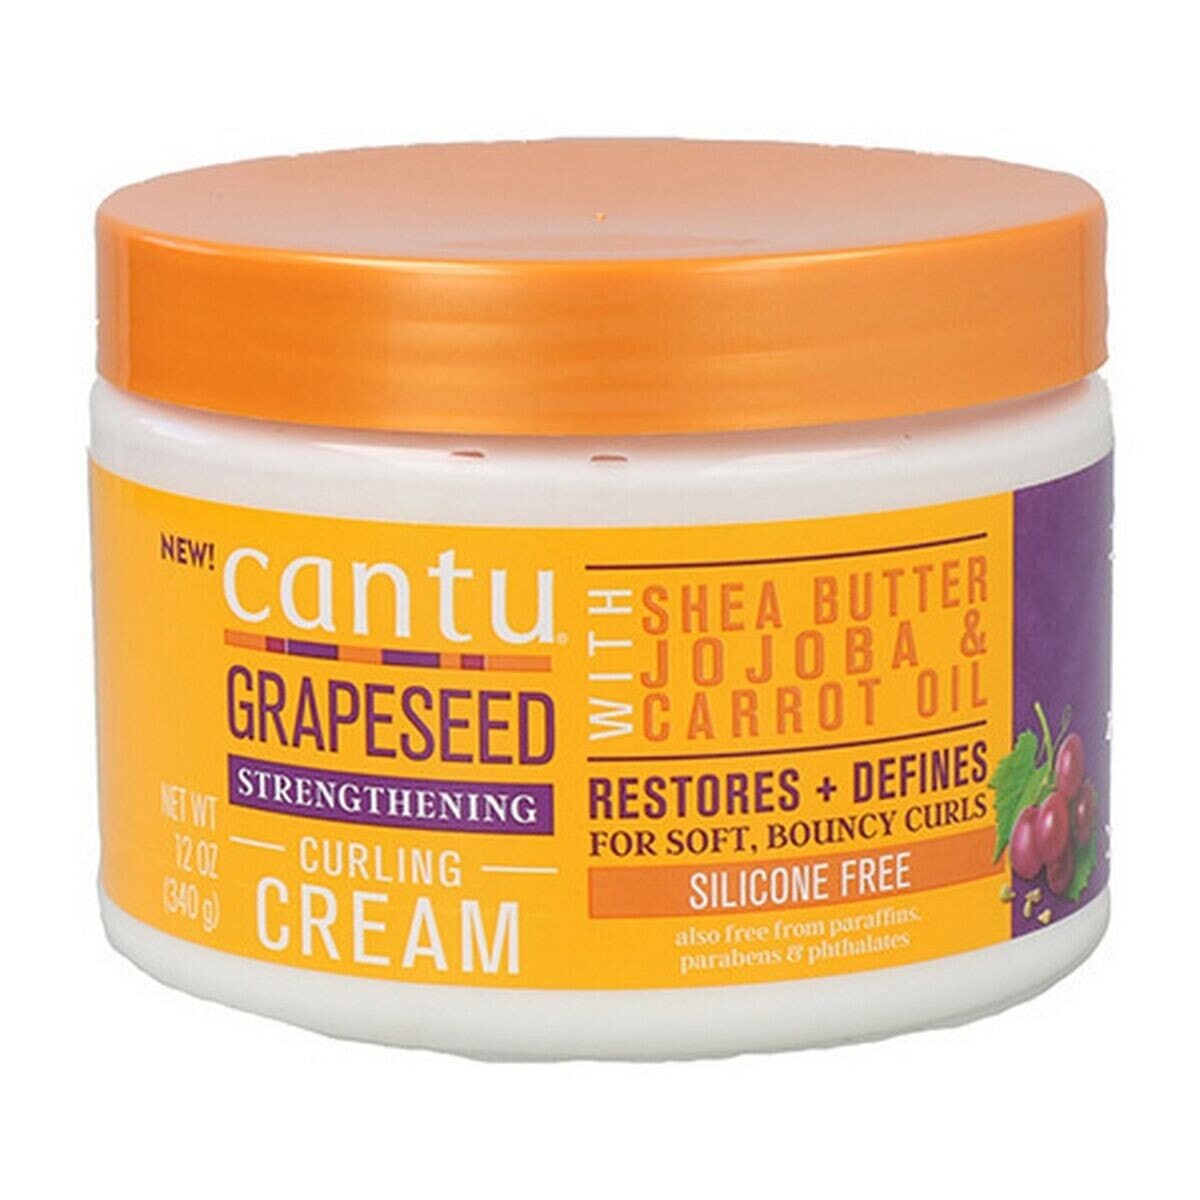 Капиллярная маска Cantu Grapeseed Curling Cream (340 g)